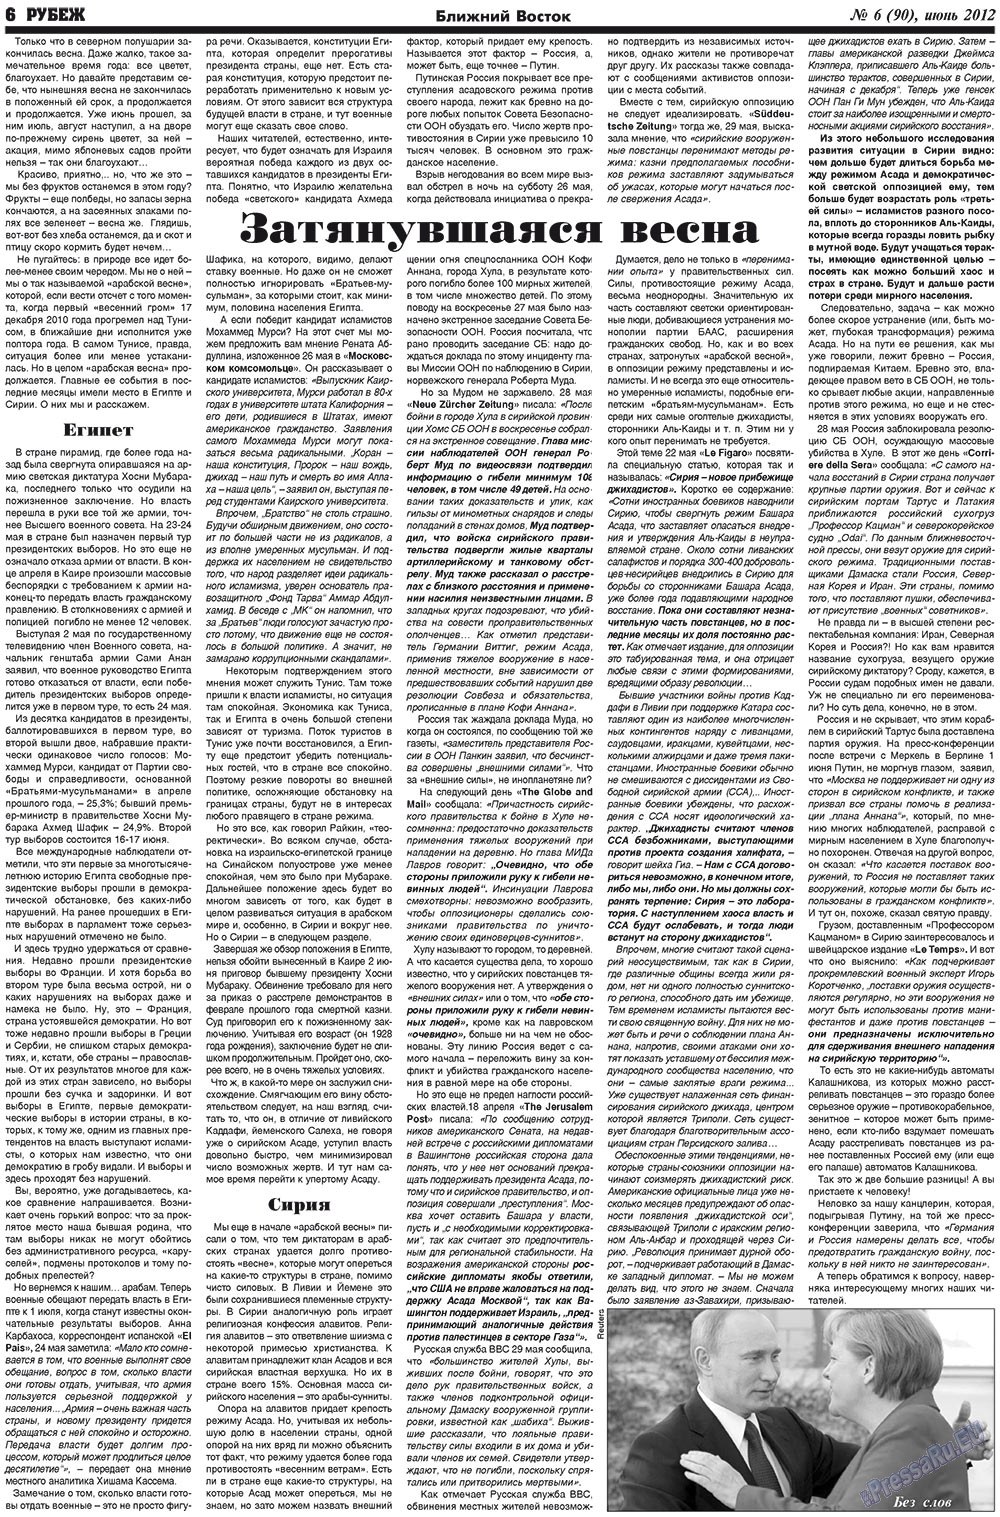 Рубеж, газета. 2012 №6 стр.6